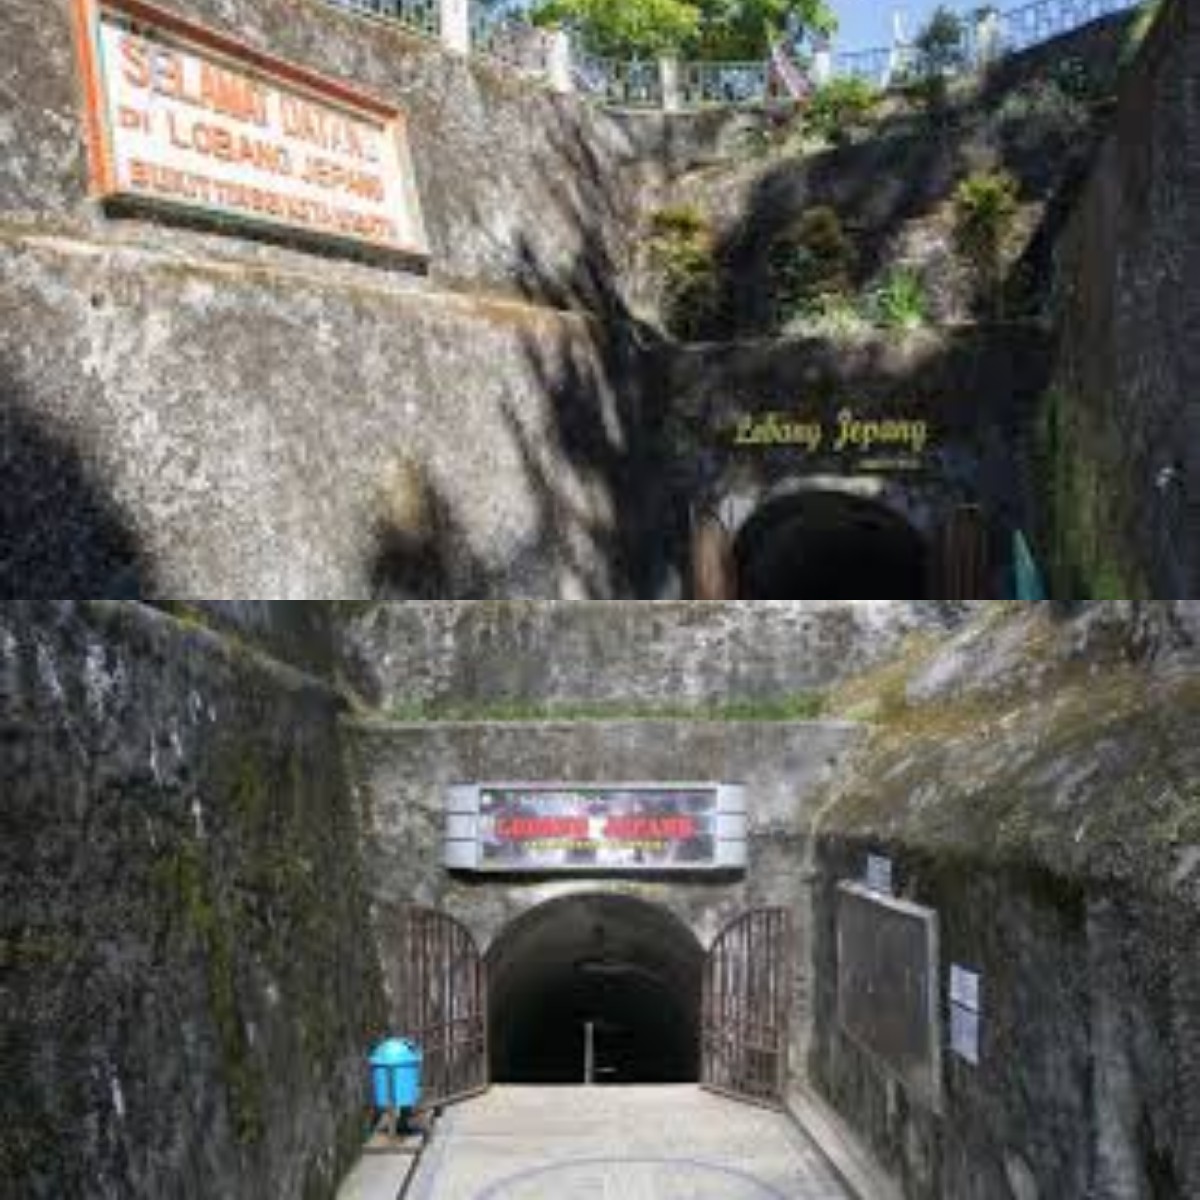 Wisata Sejarah: Inilah Fakta Menarik dari Sejarah Lobang Jepang di Bukittinggi 